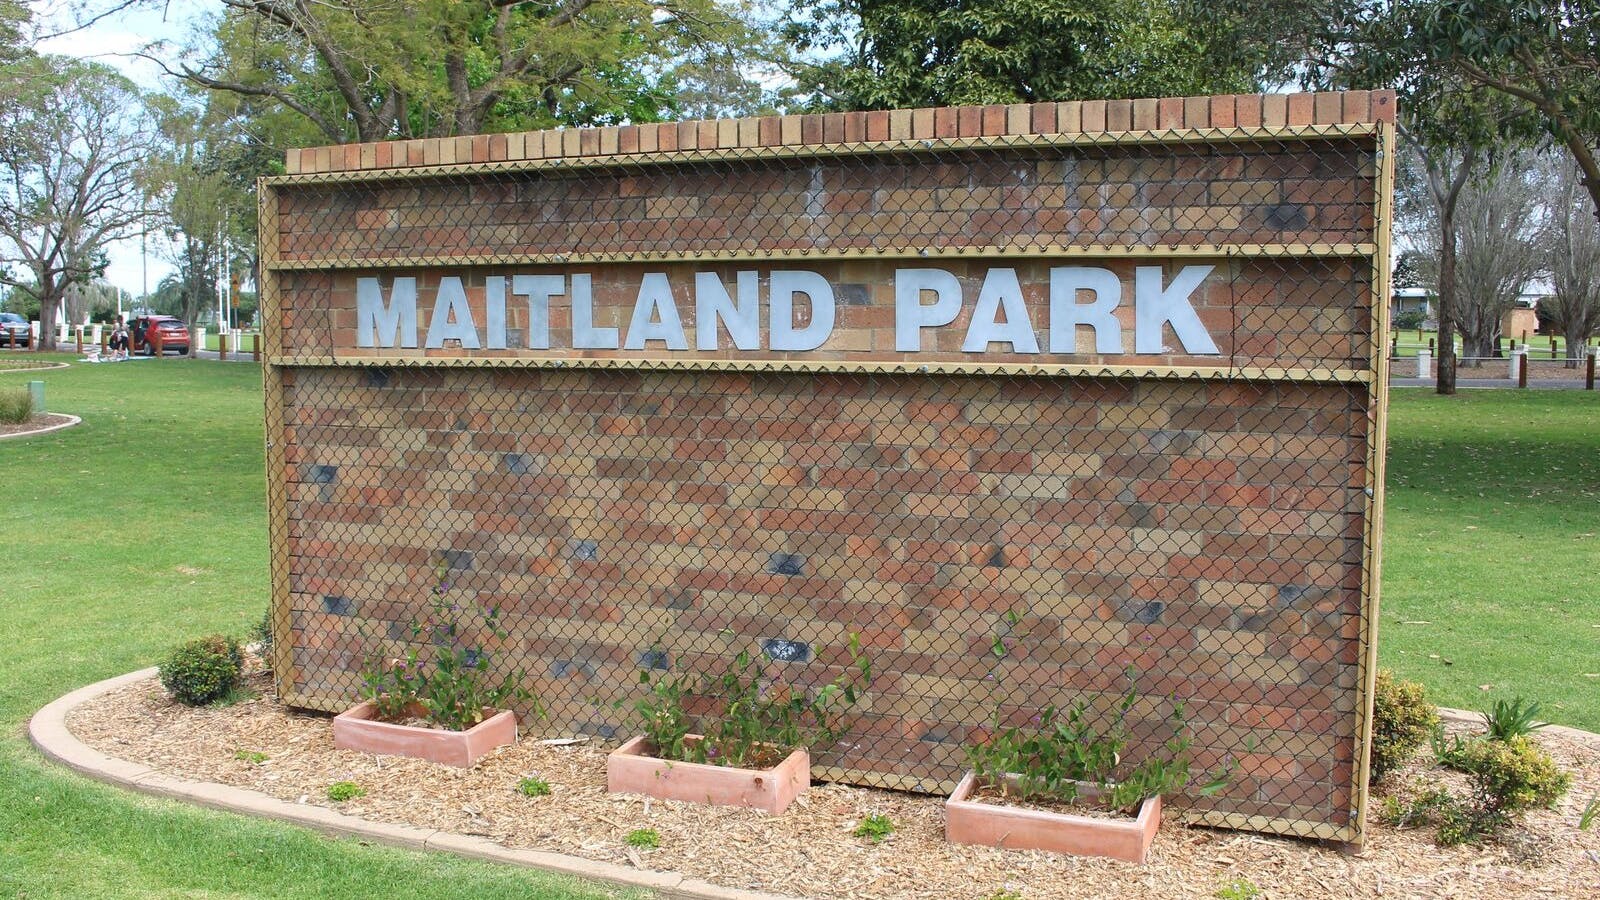 Maitland Park